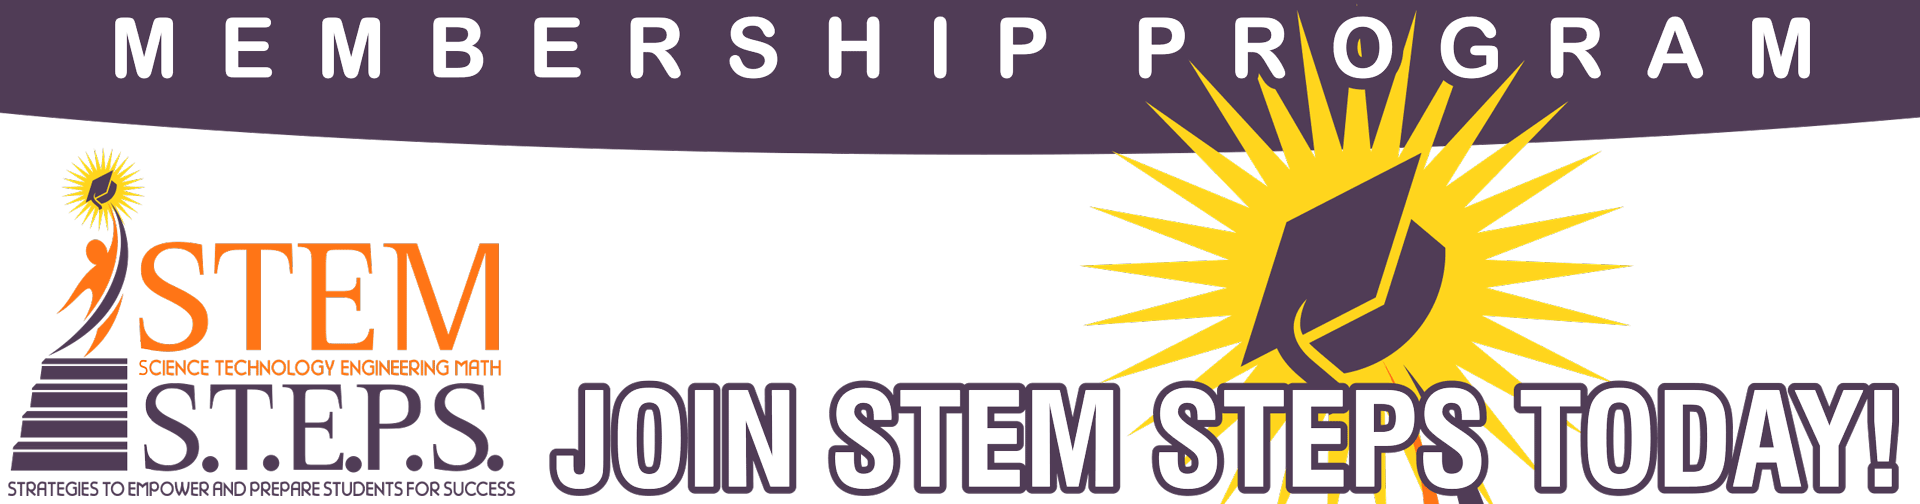 STEM S.T.E.P.S. 3.0 Membership Program - Join Now!